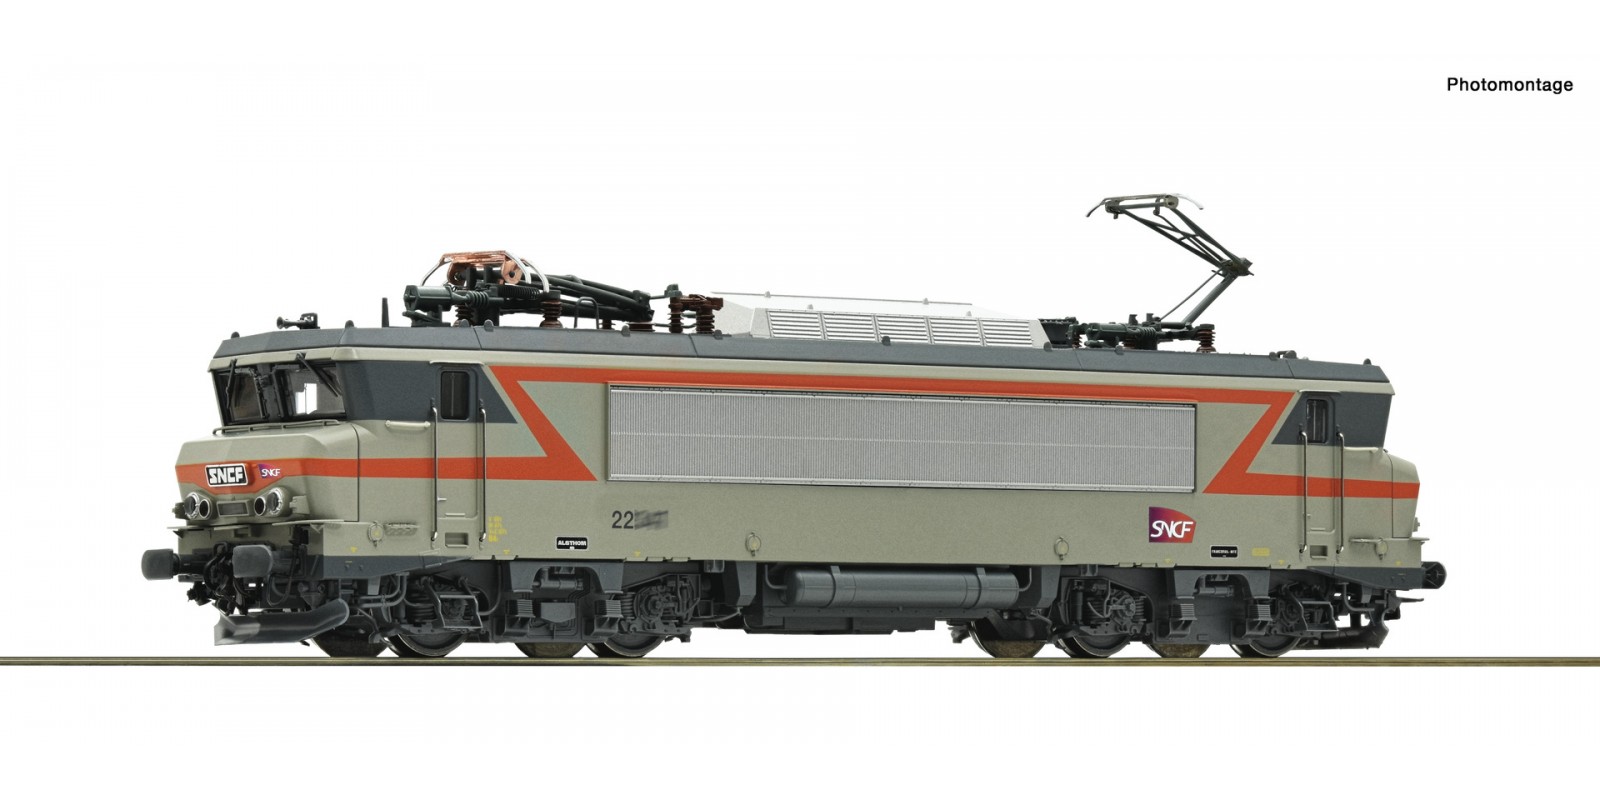 RO73877 Electric locomotive BB 22332